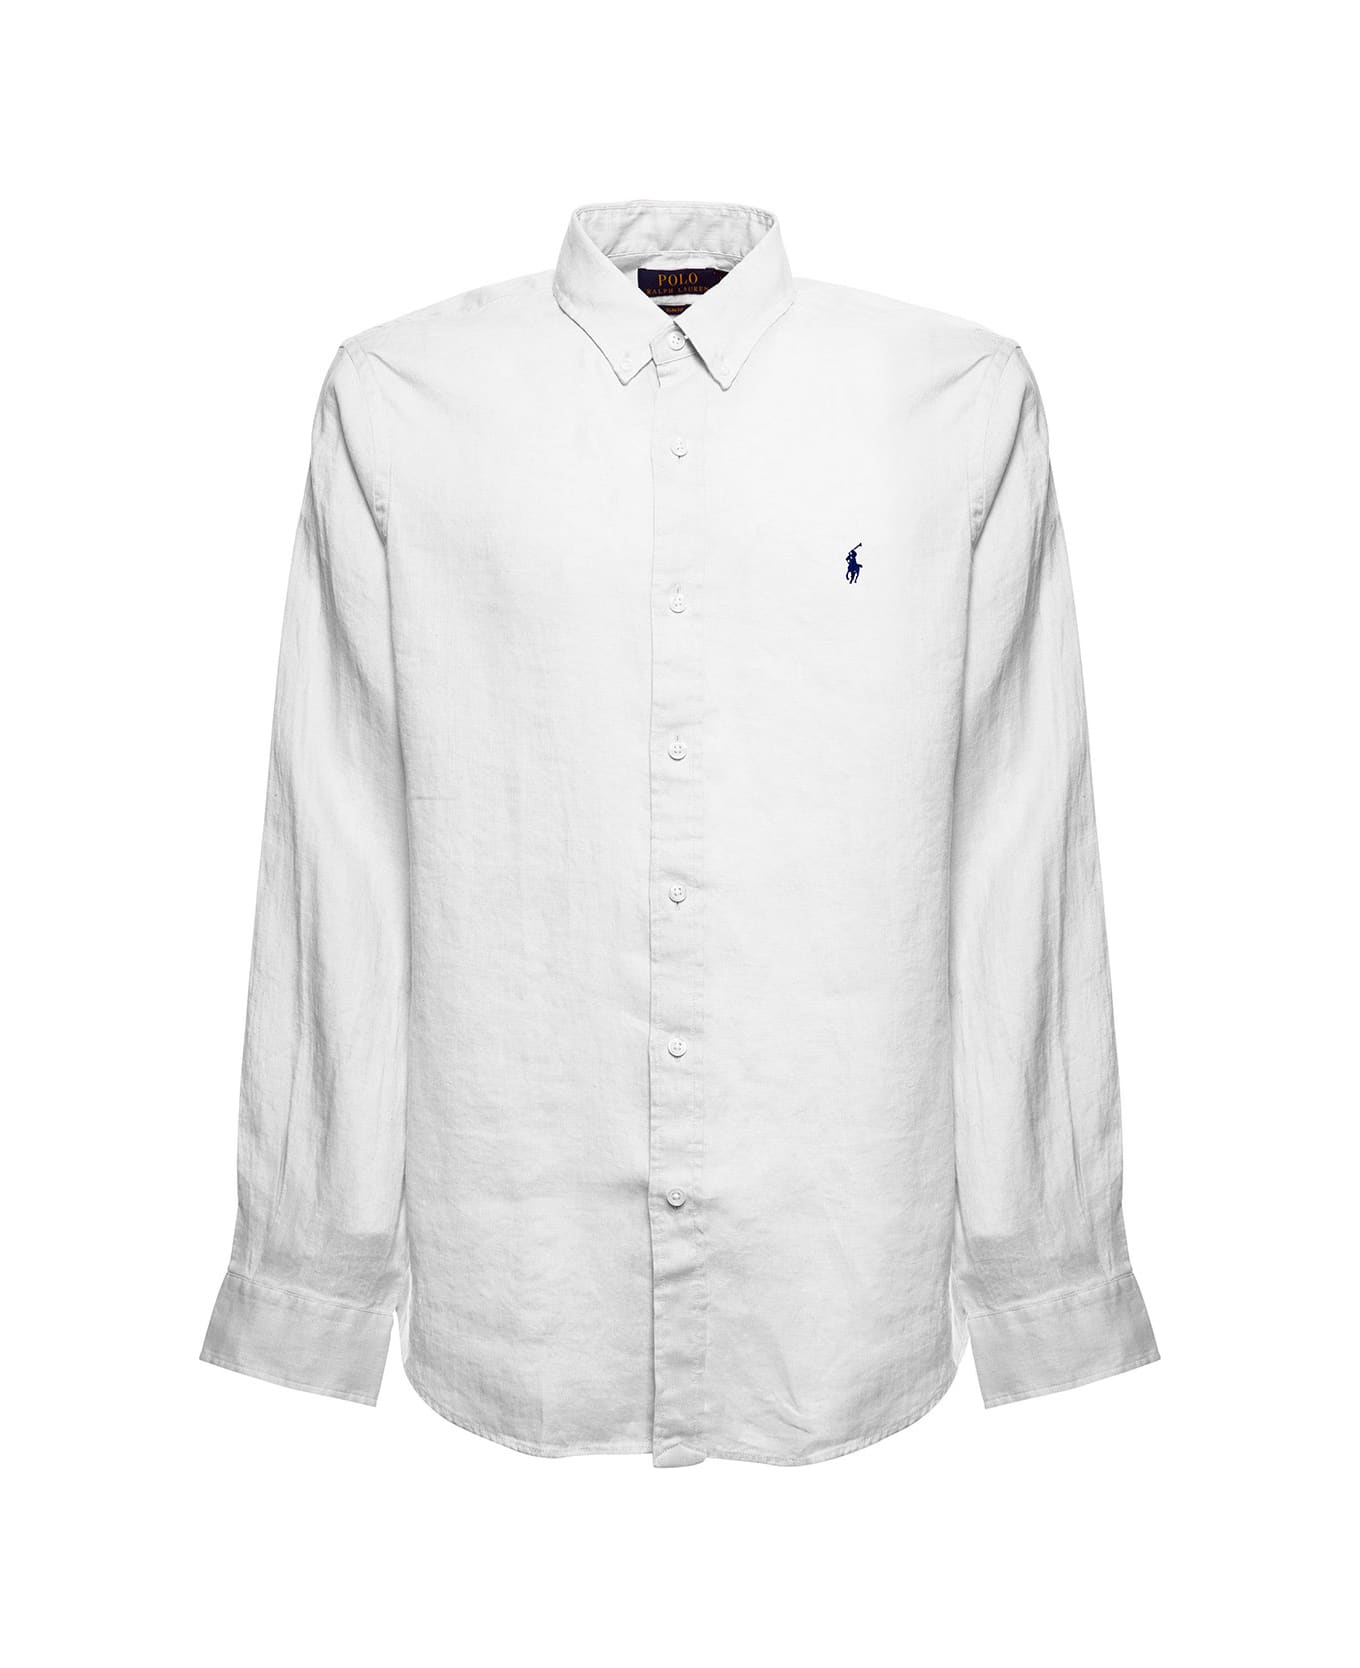 Polo Ralph Lauren Man 's White Linen Shirt With Logo - White